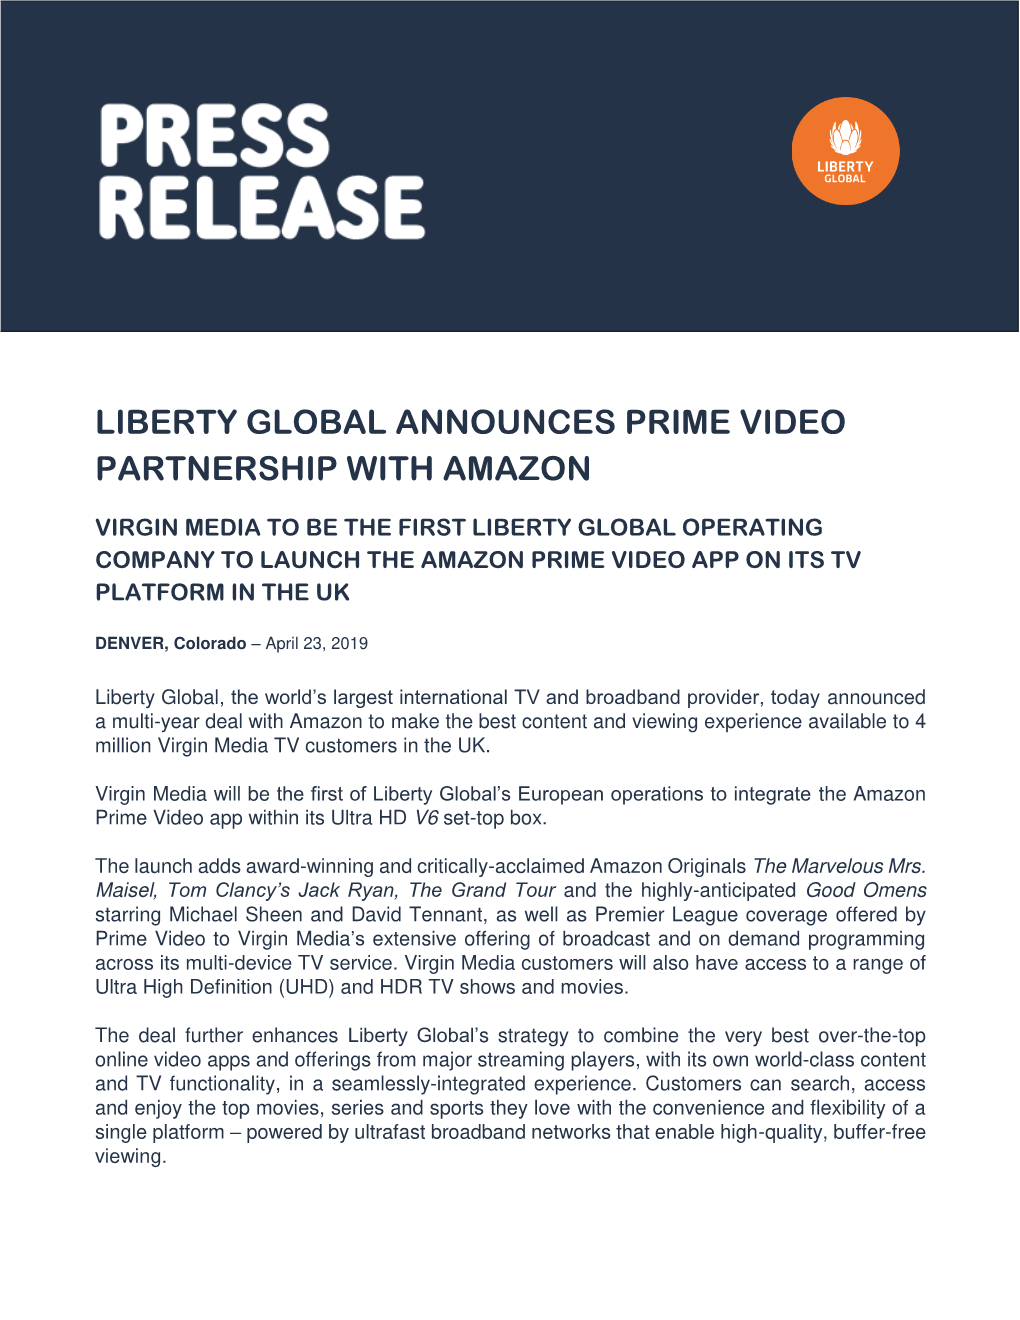 Liberty Global Announces Prime Video Partnership with Amazon